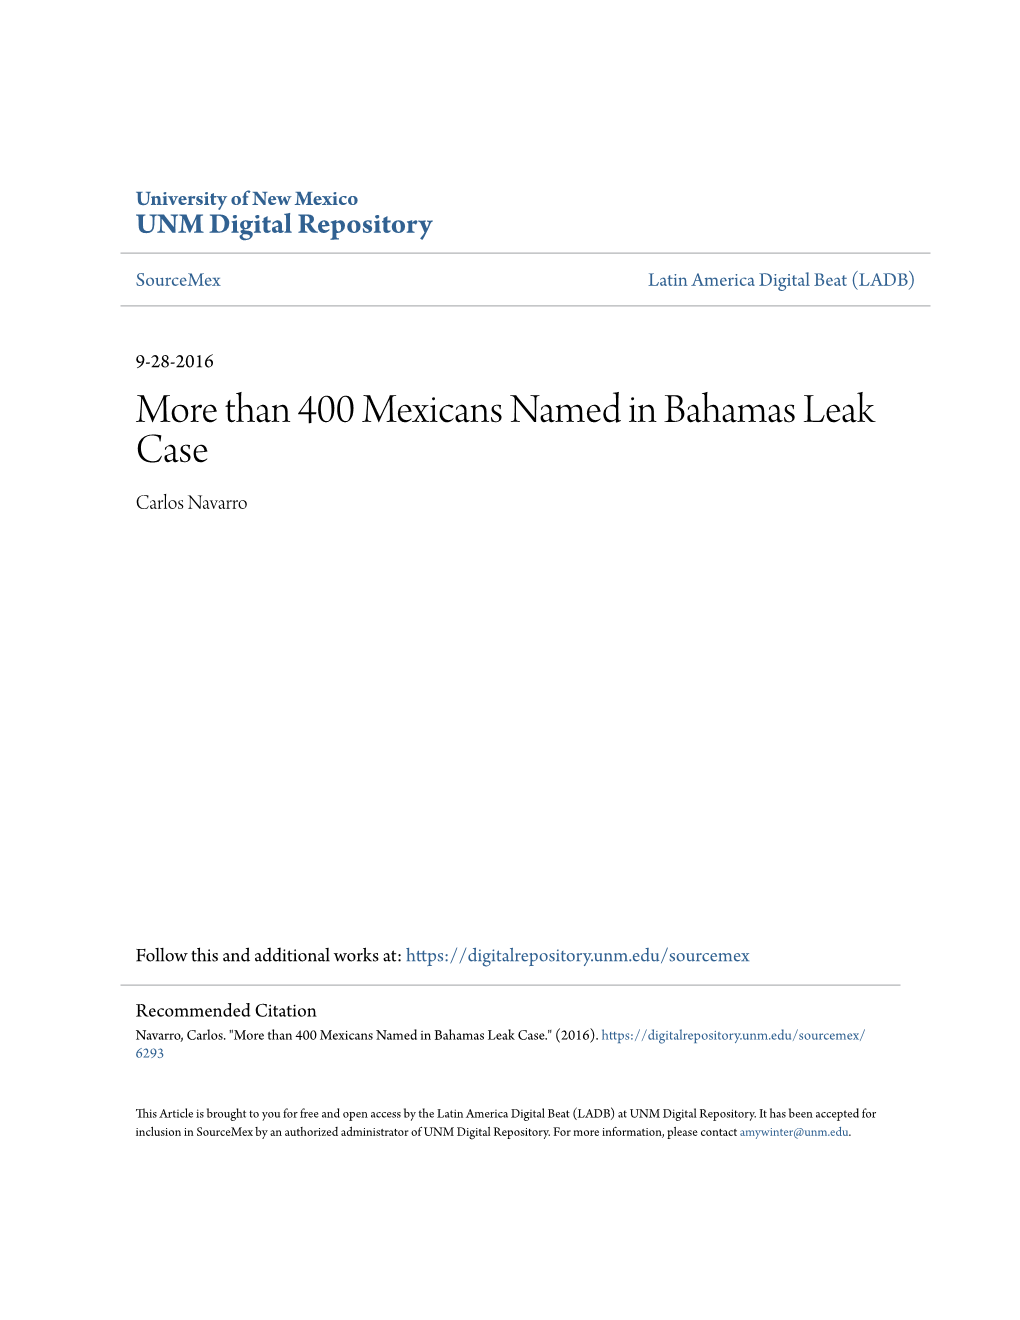 Than 400 Mexicans Named in Bahamas Leak Case Carlos Navarro